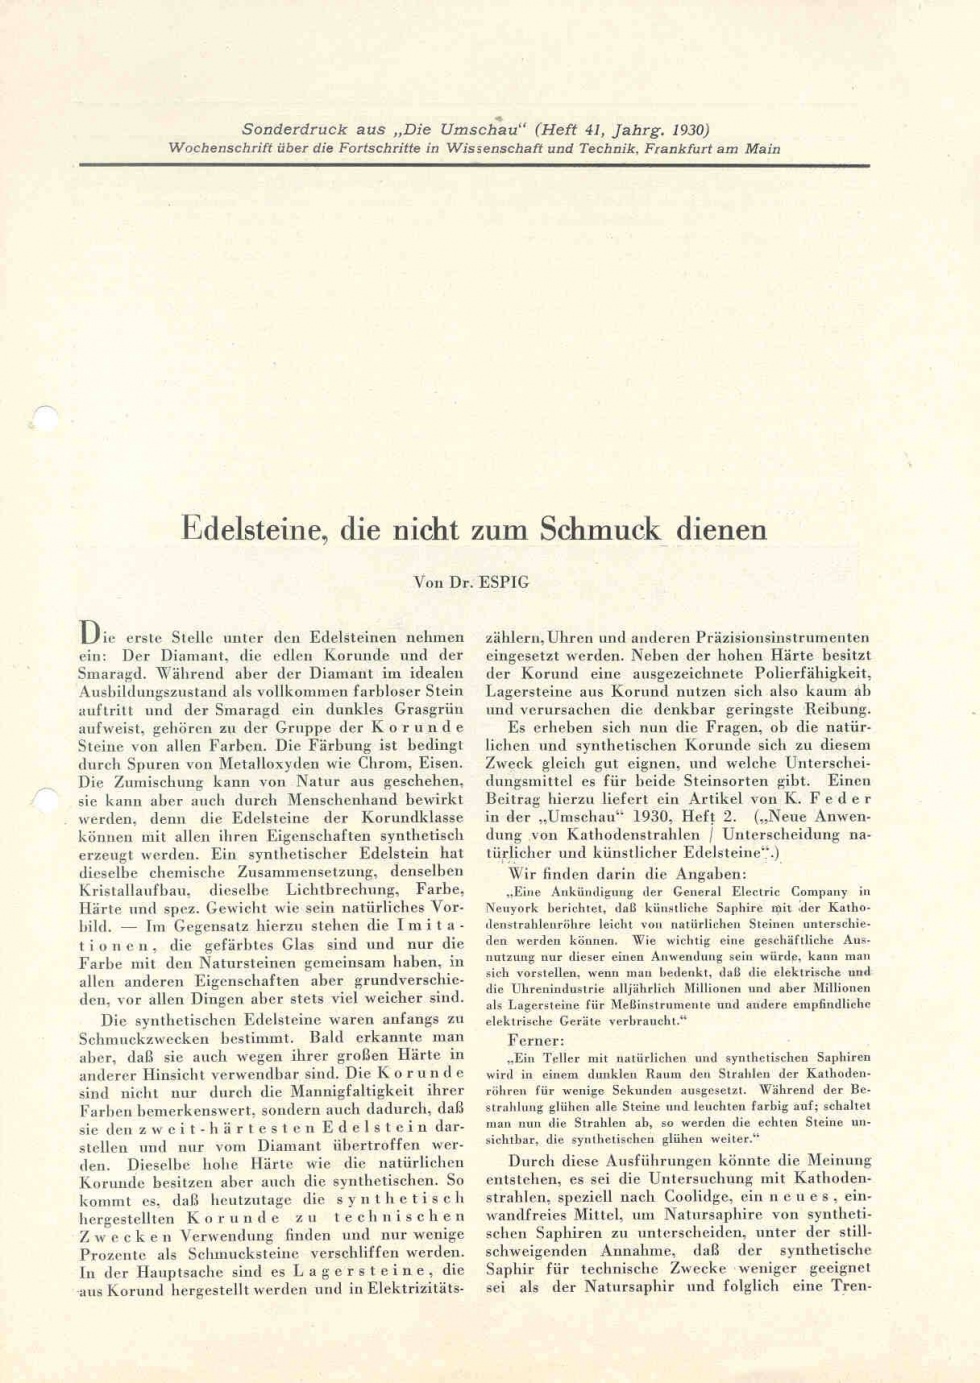 Sonderdruck aus &quot;Die Umschau&quot; - Heft 41, Jg. 1930 (Kreismuseum Bitterfeld CC BY-NC-SA)